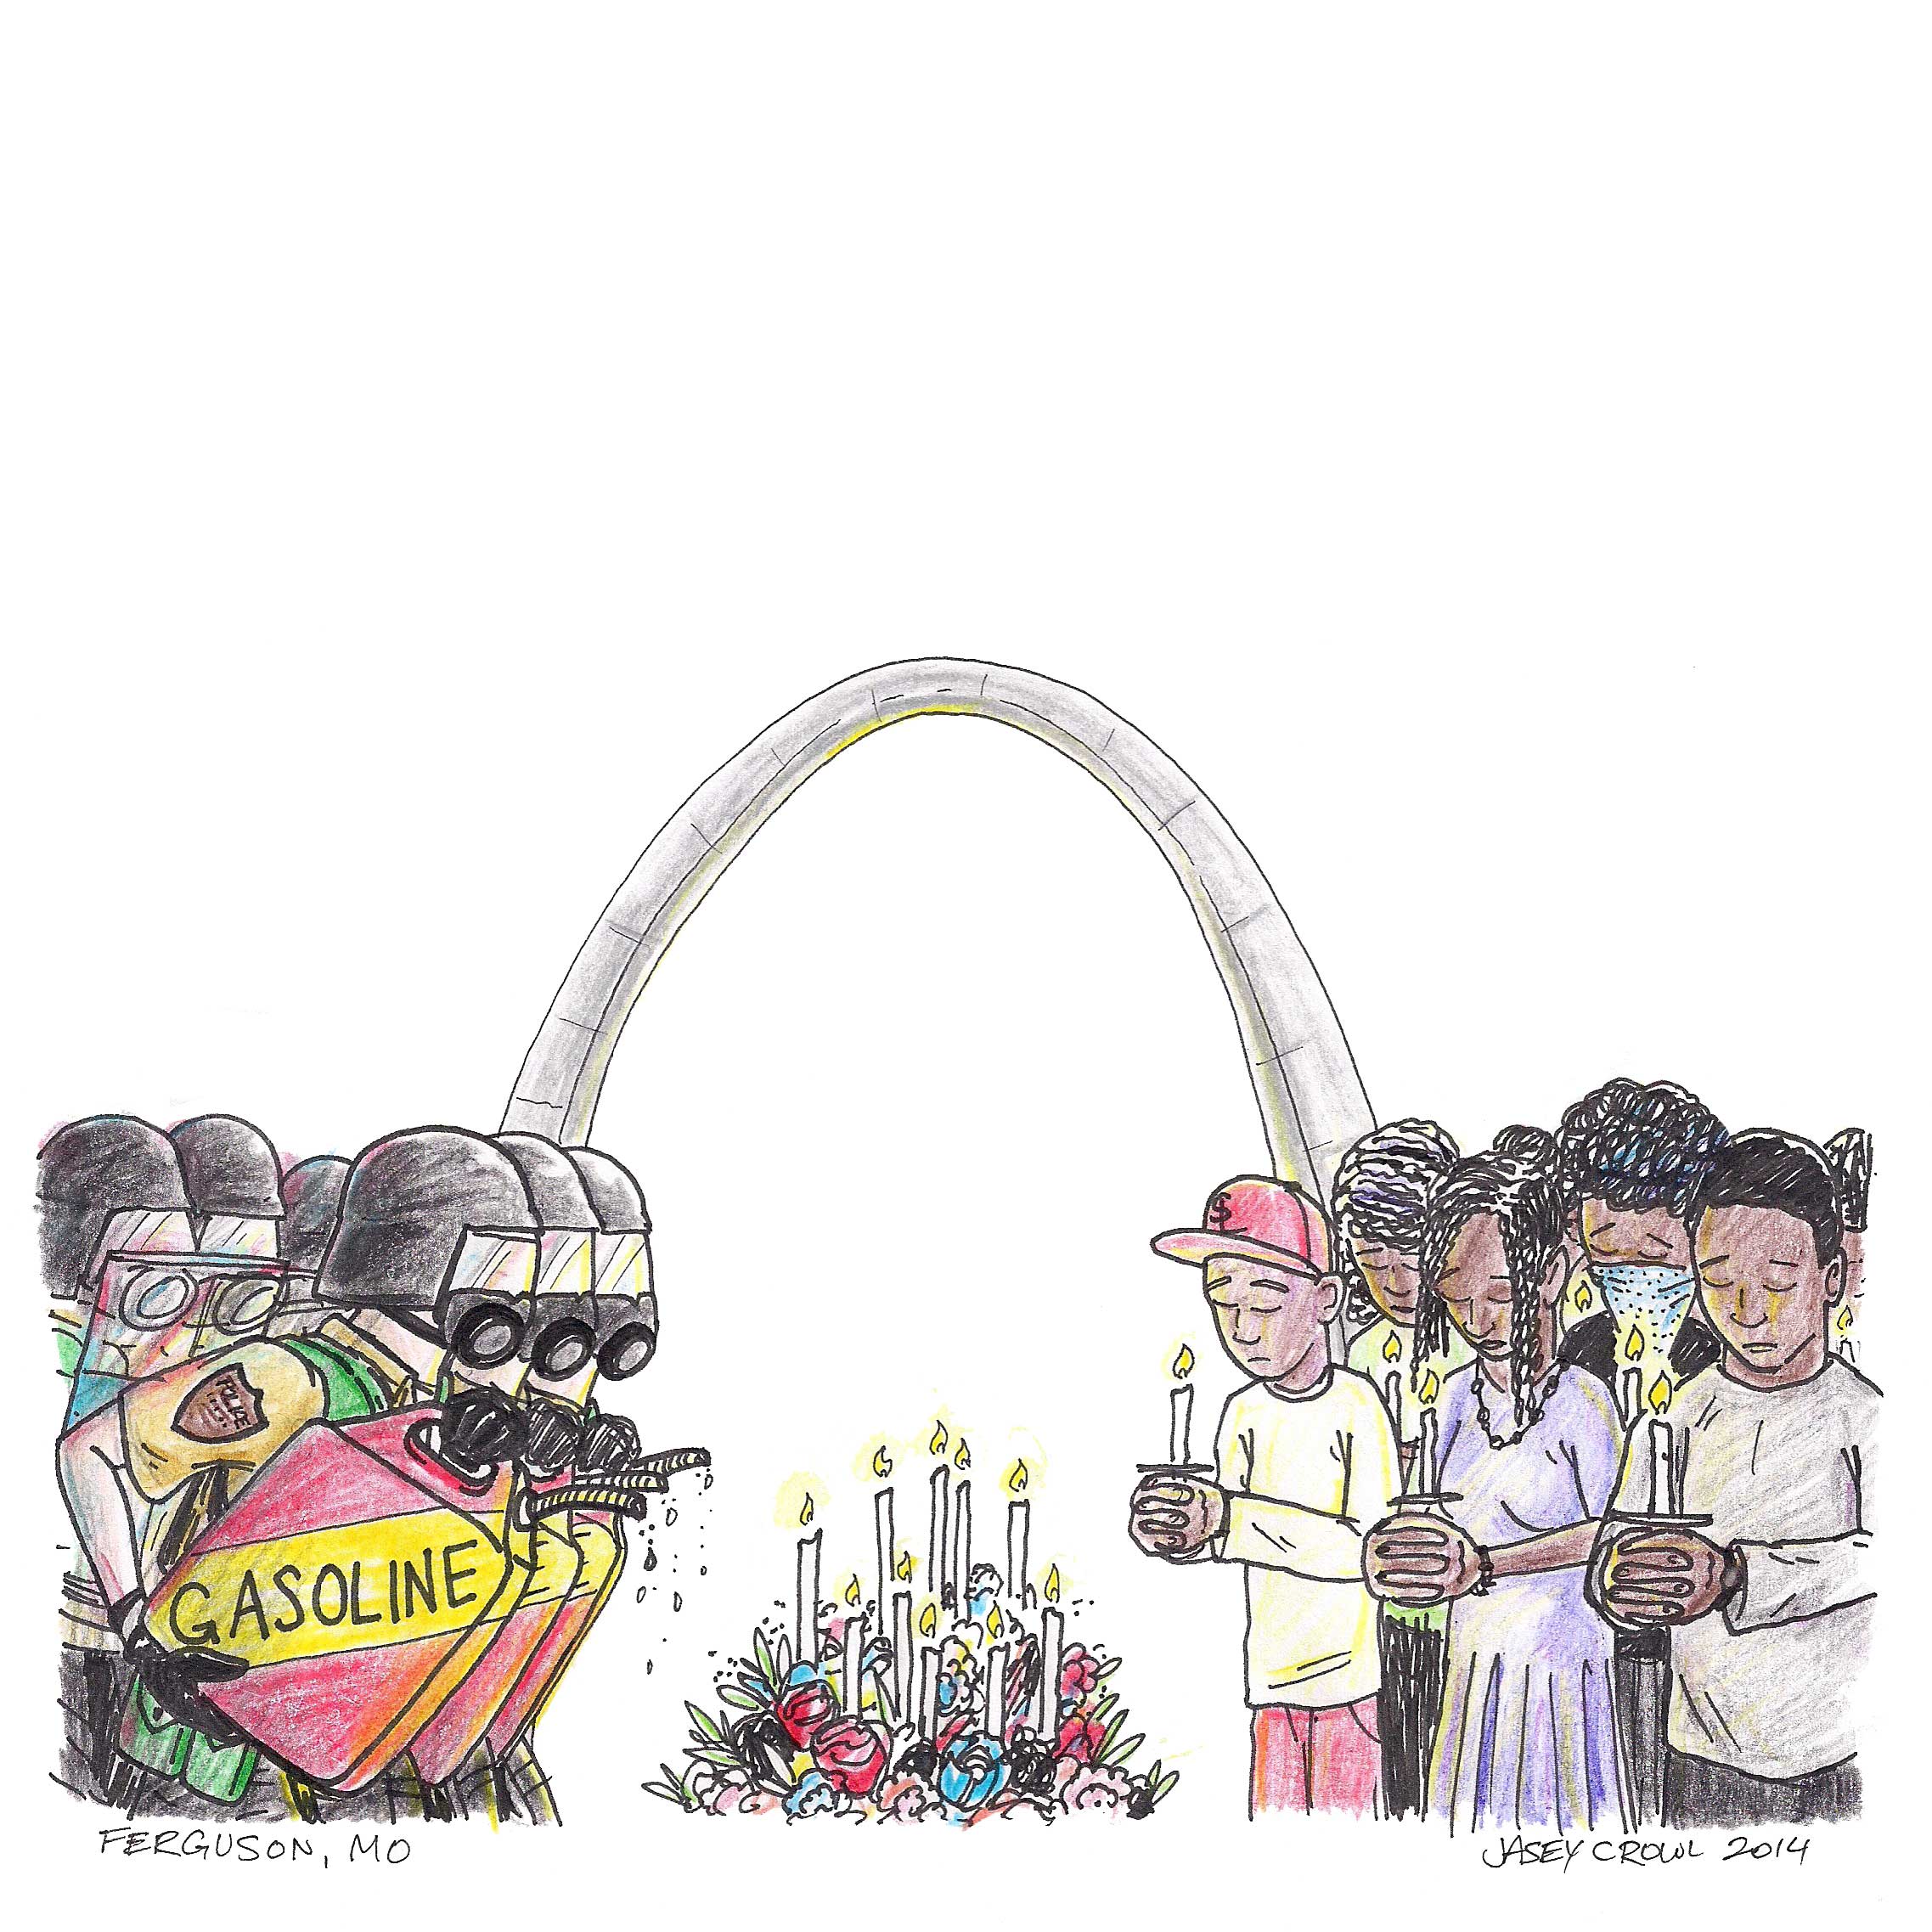 Ferguson 2014 political cartoon - Jasey Crowl Draws